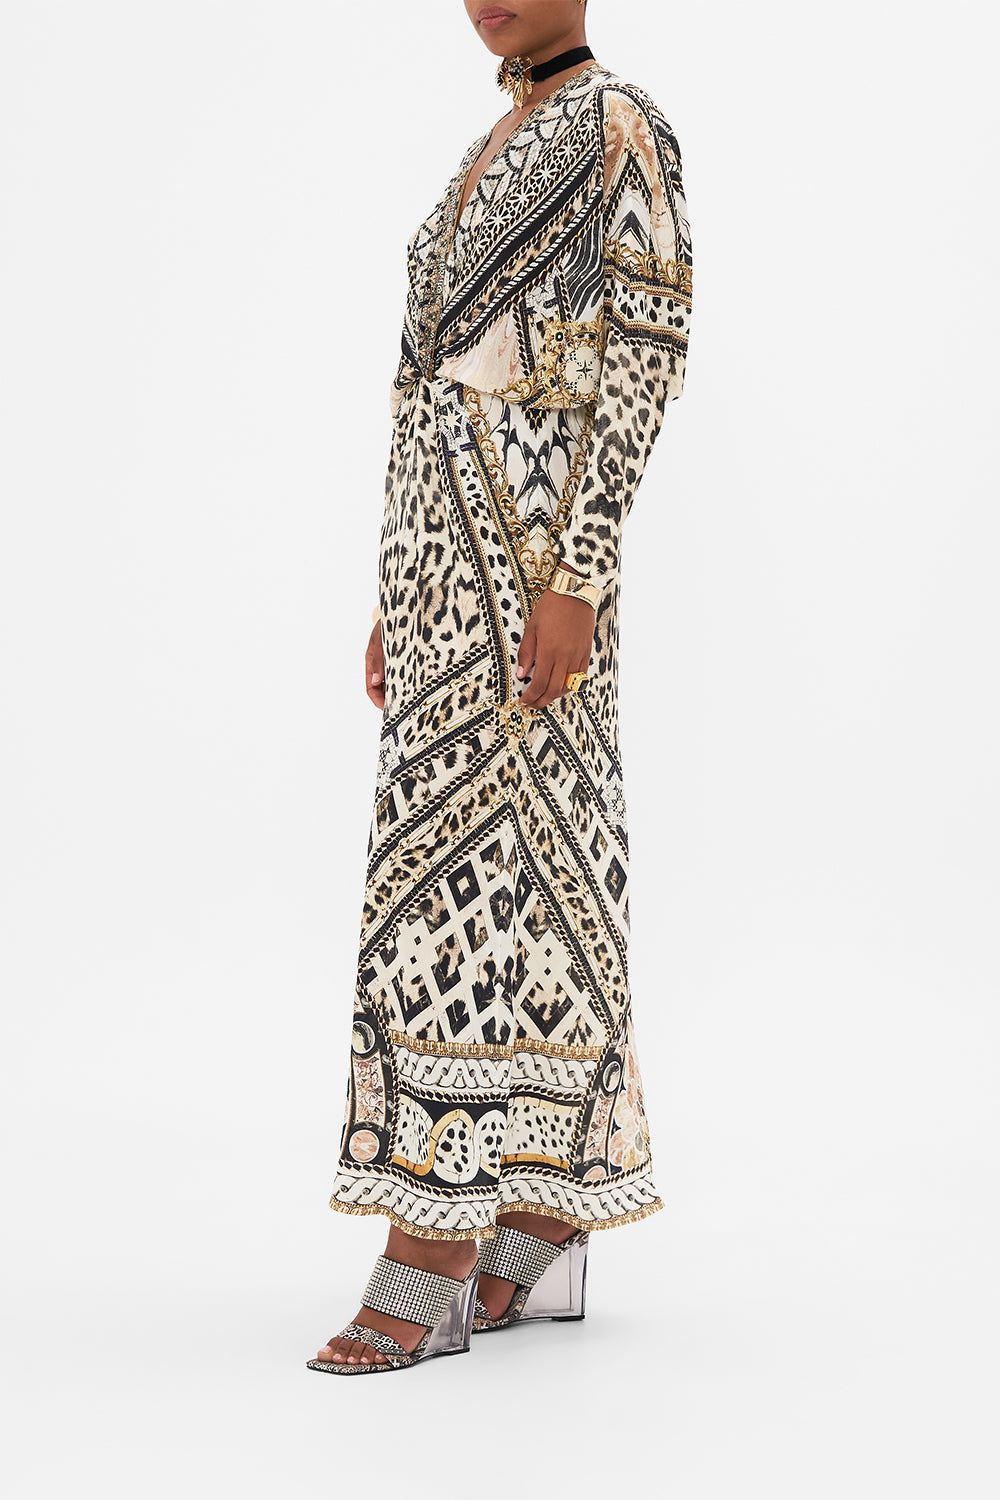 Side view of model wearing CAMILLA silk batwing dress in Mosiac Muse print